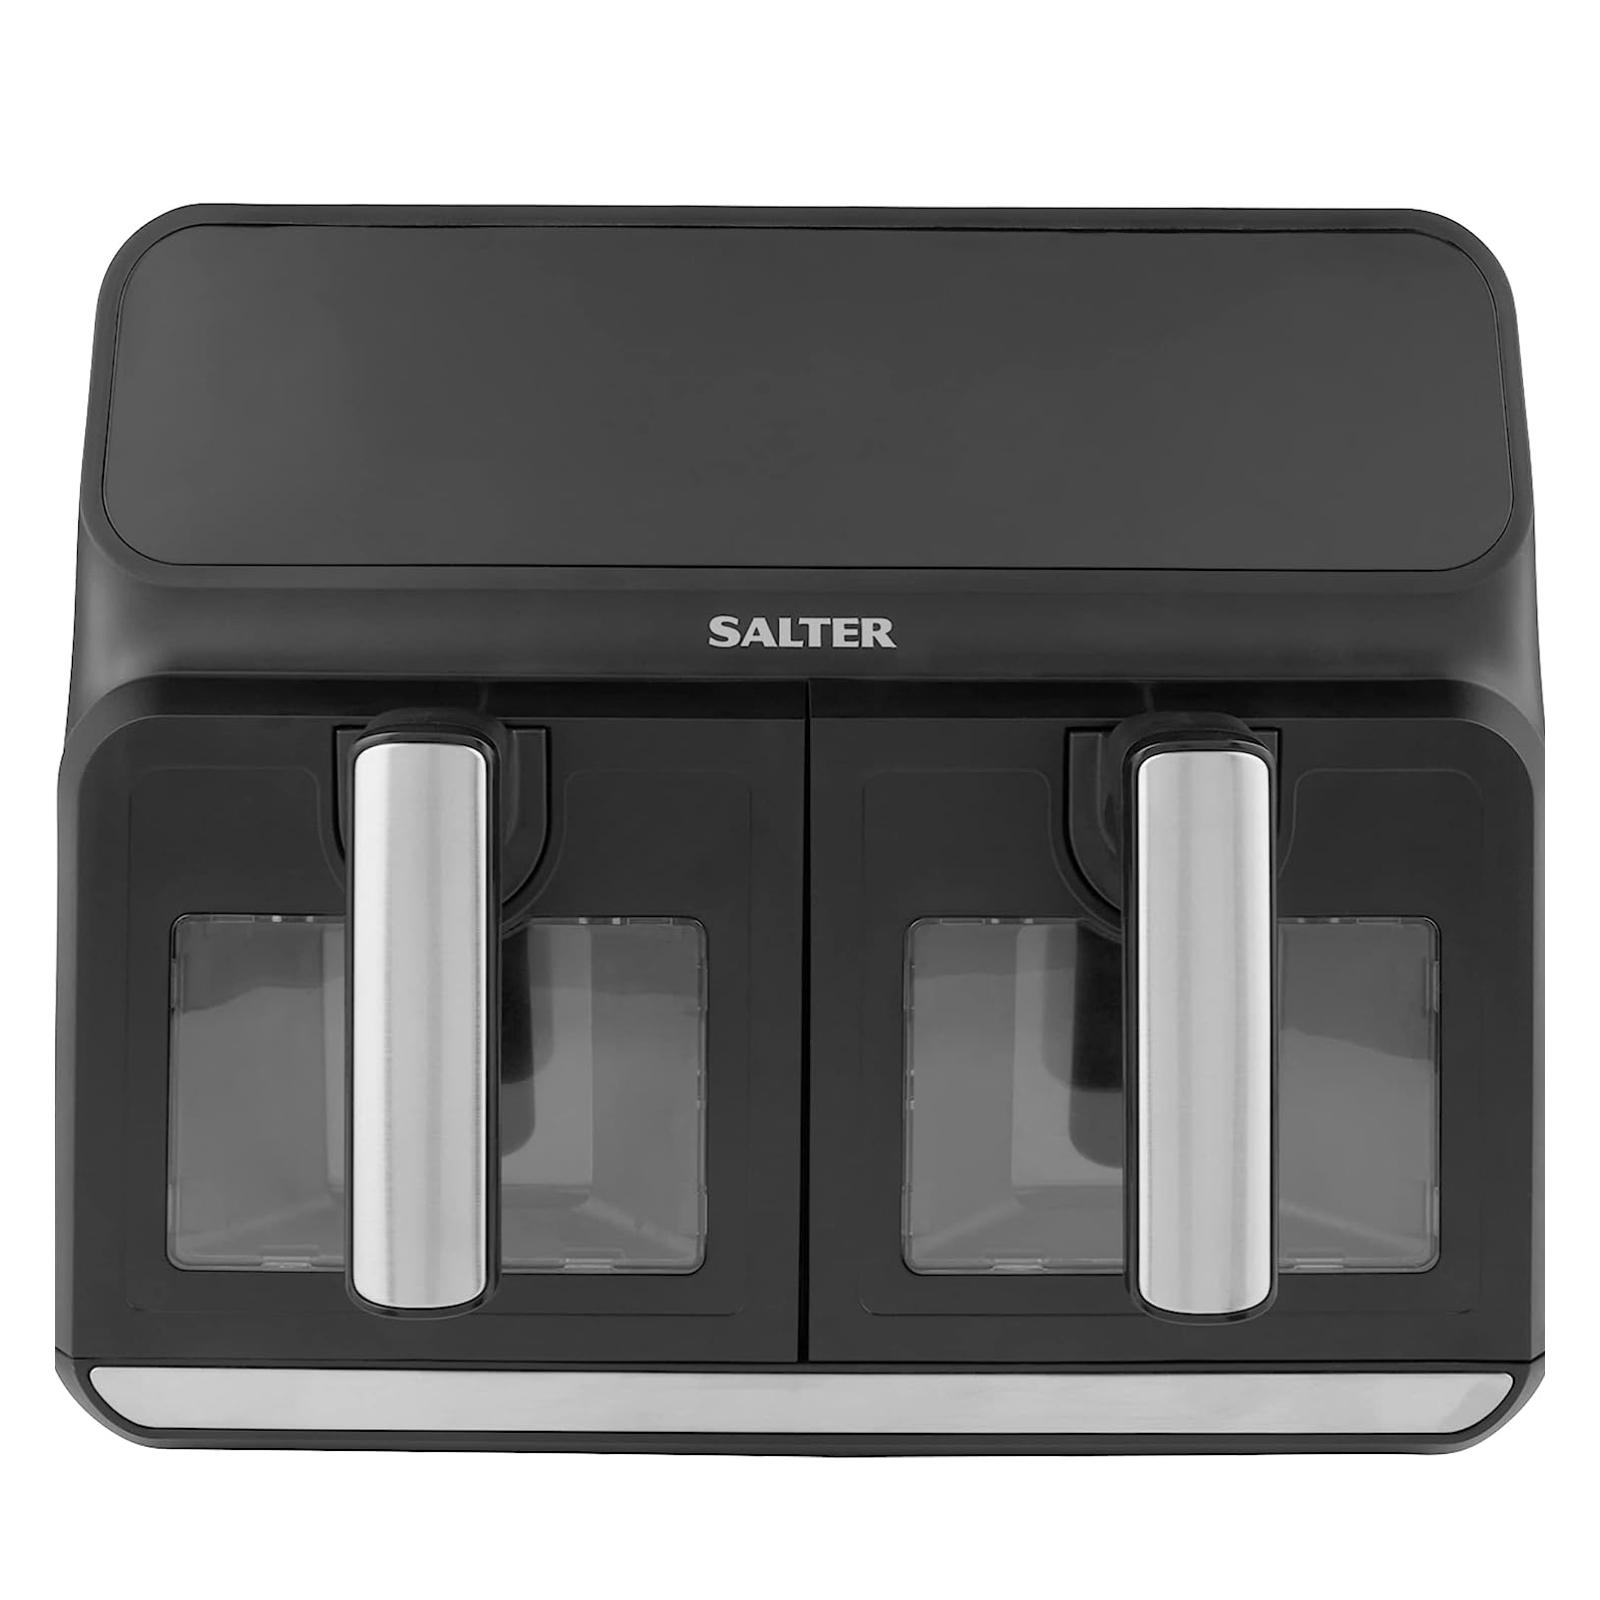 Salter EK5196GW Dual Air Fryer 7.6L With Clear Viewing Window